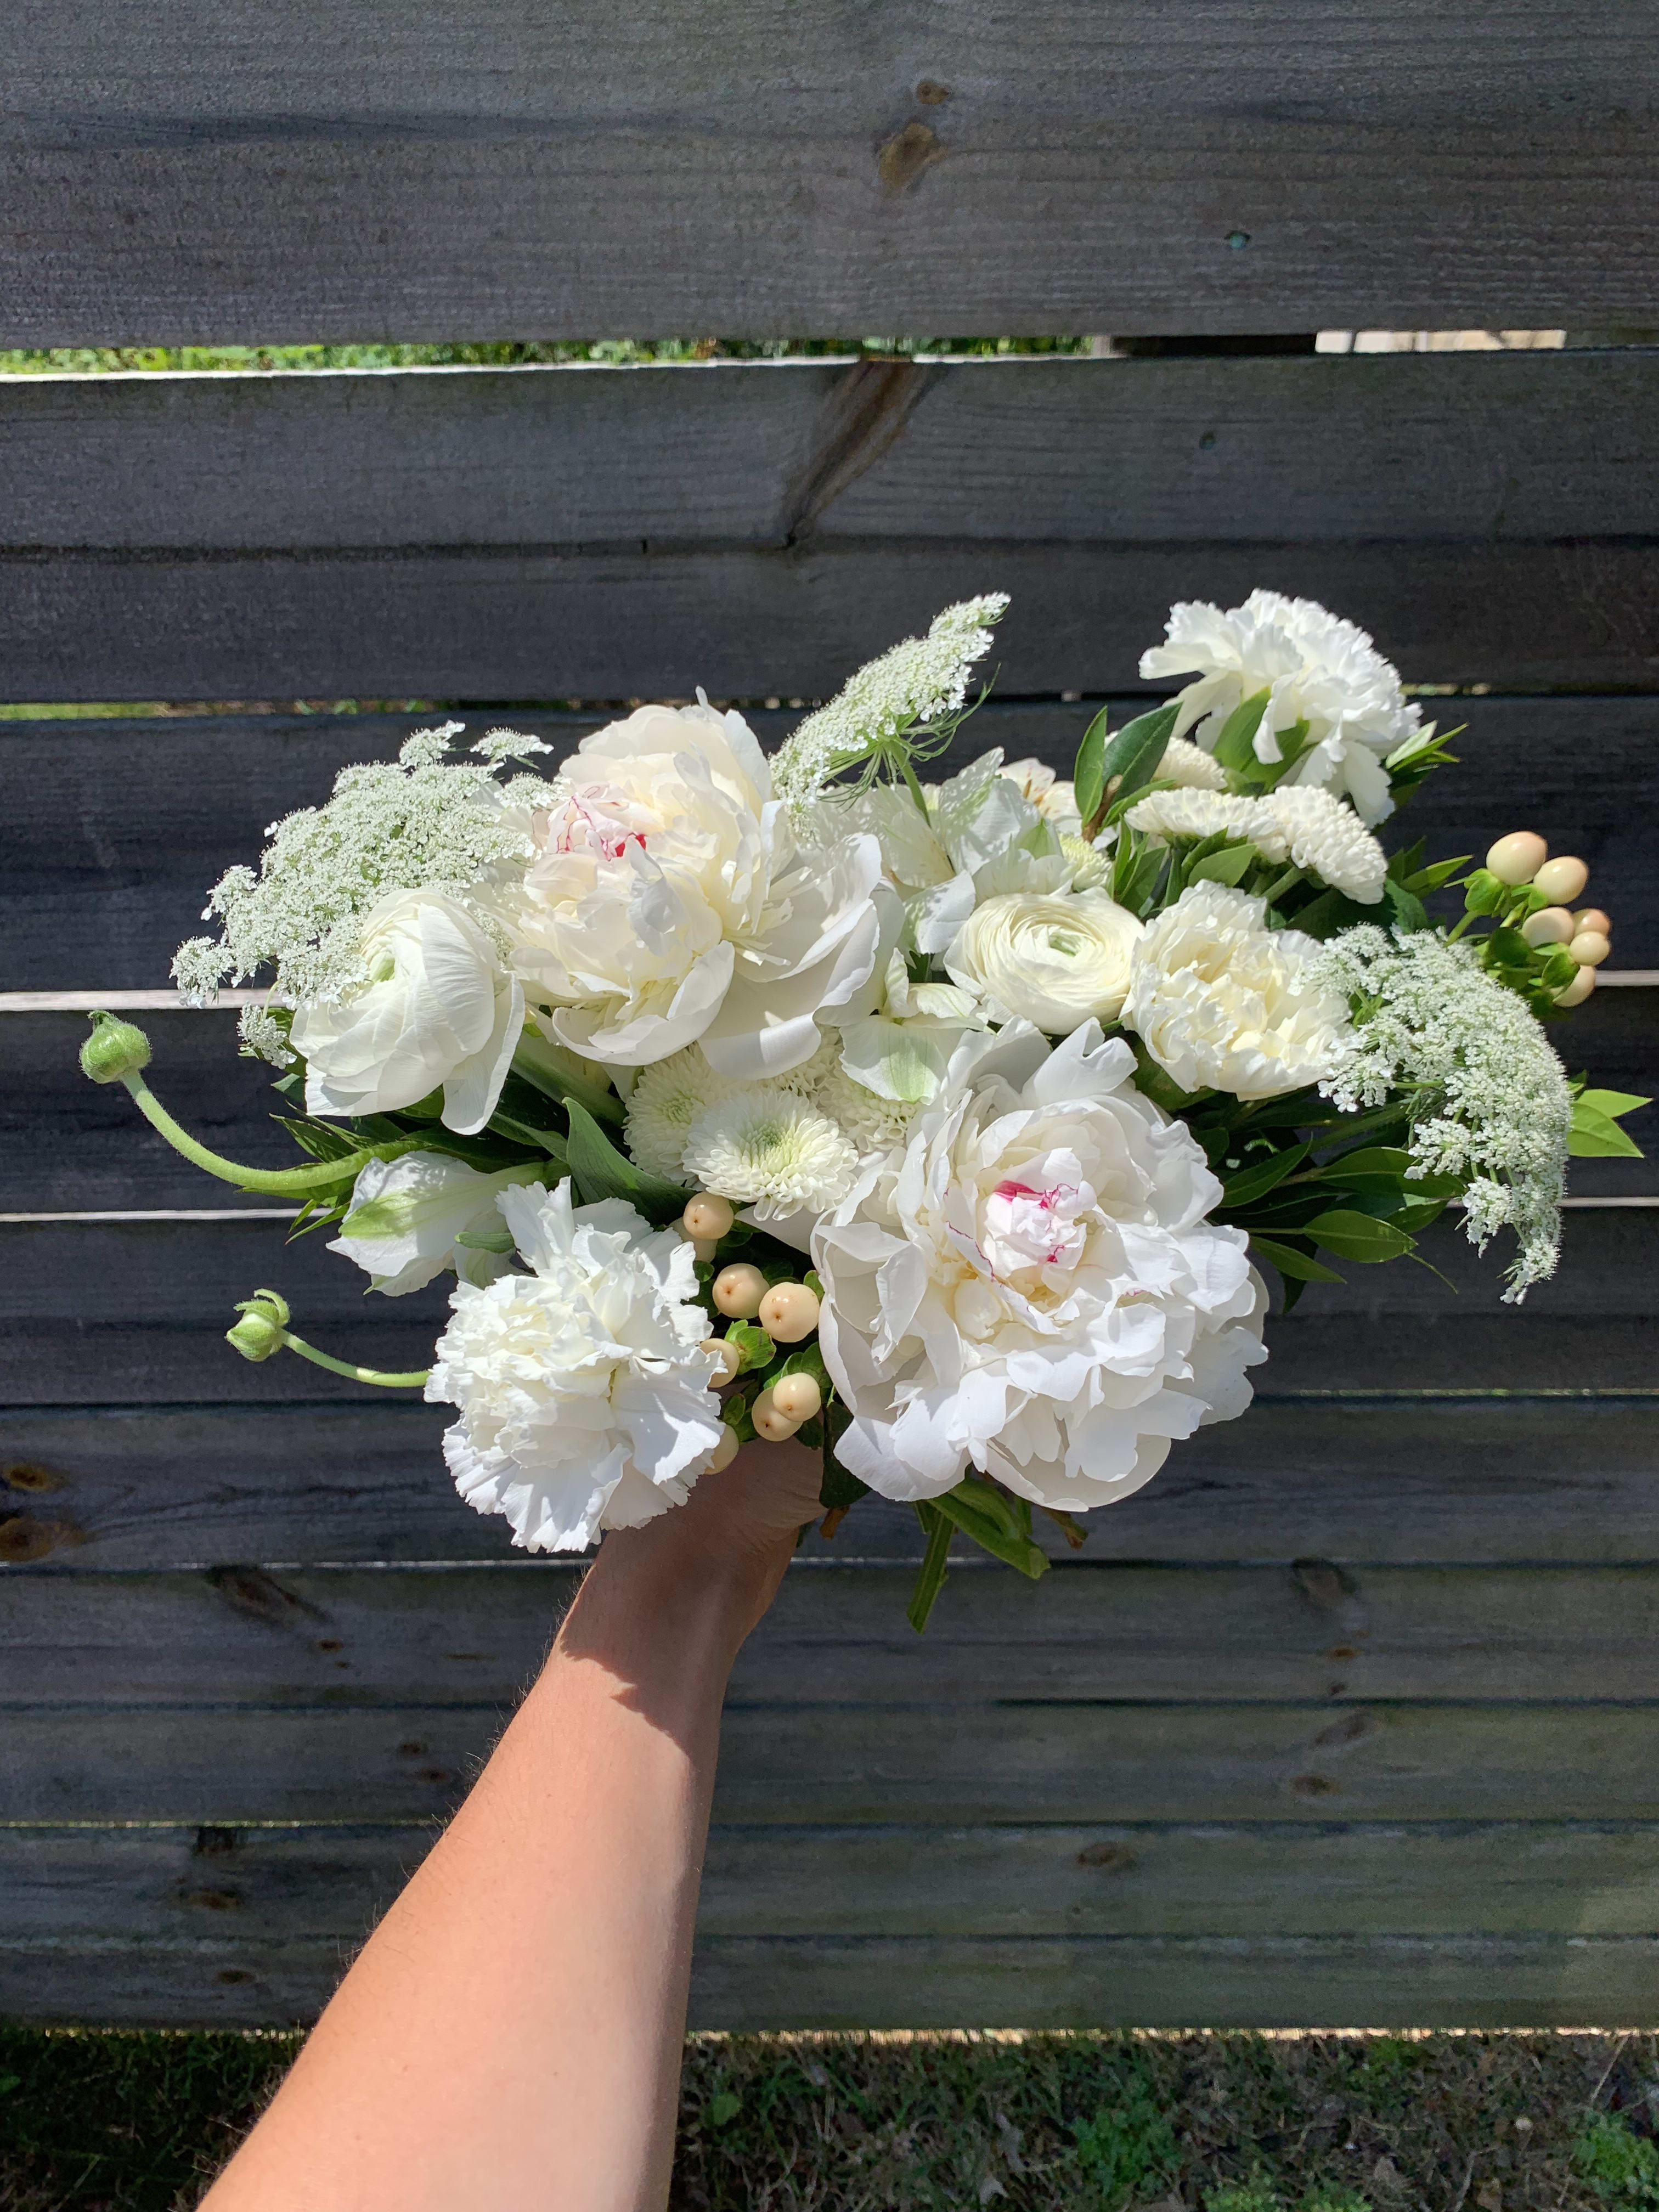 Elegant Peonies - This arrangement is full of premium white and blush flowers. This arrangement is sure to wow any elegant recipient.